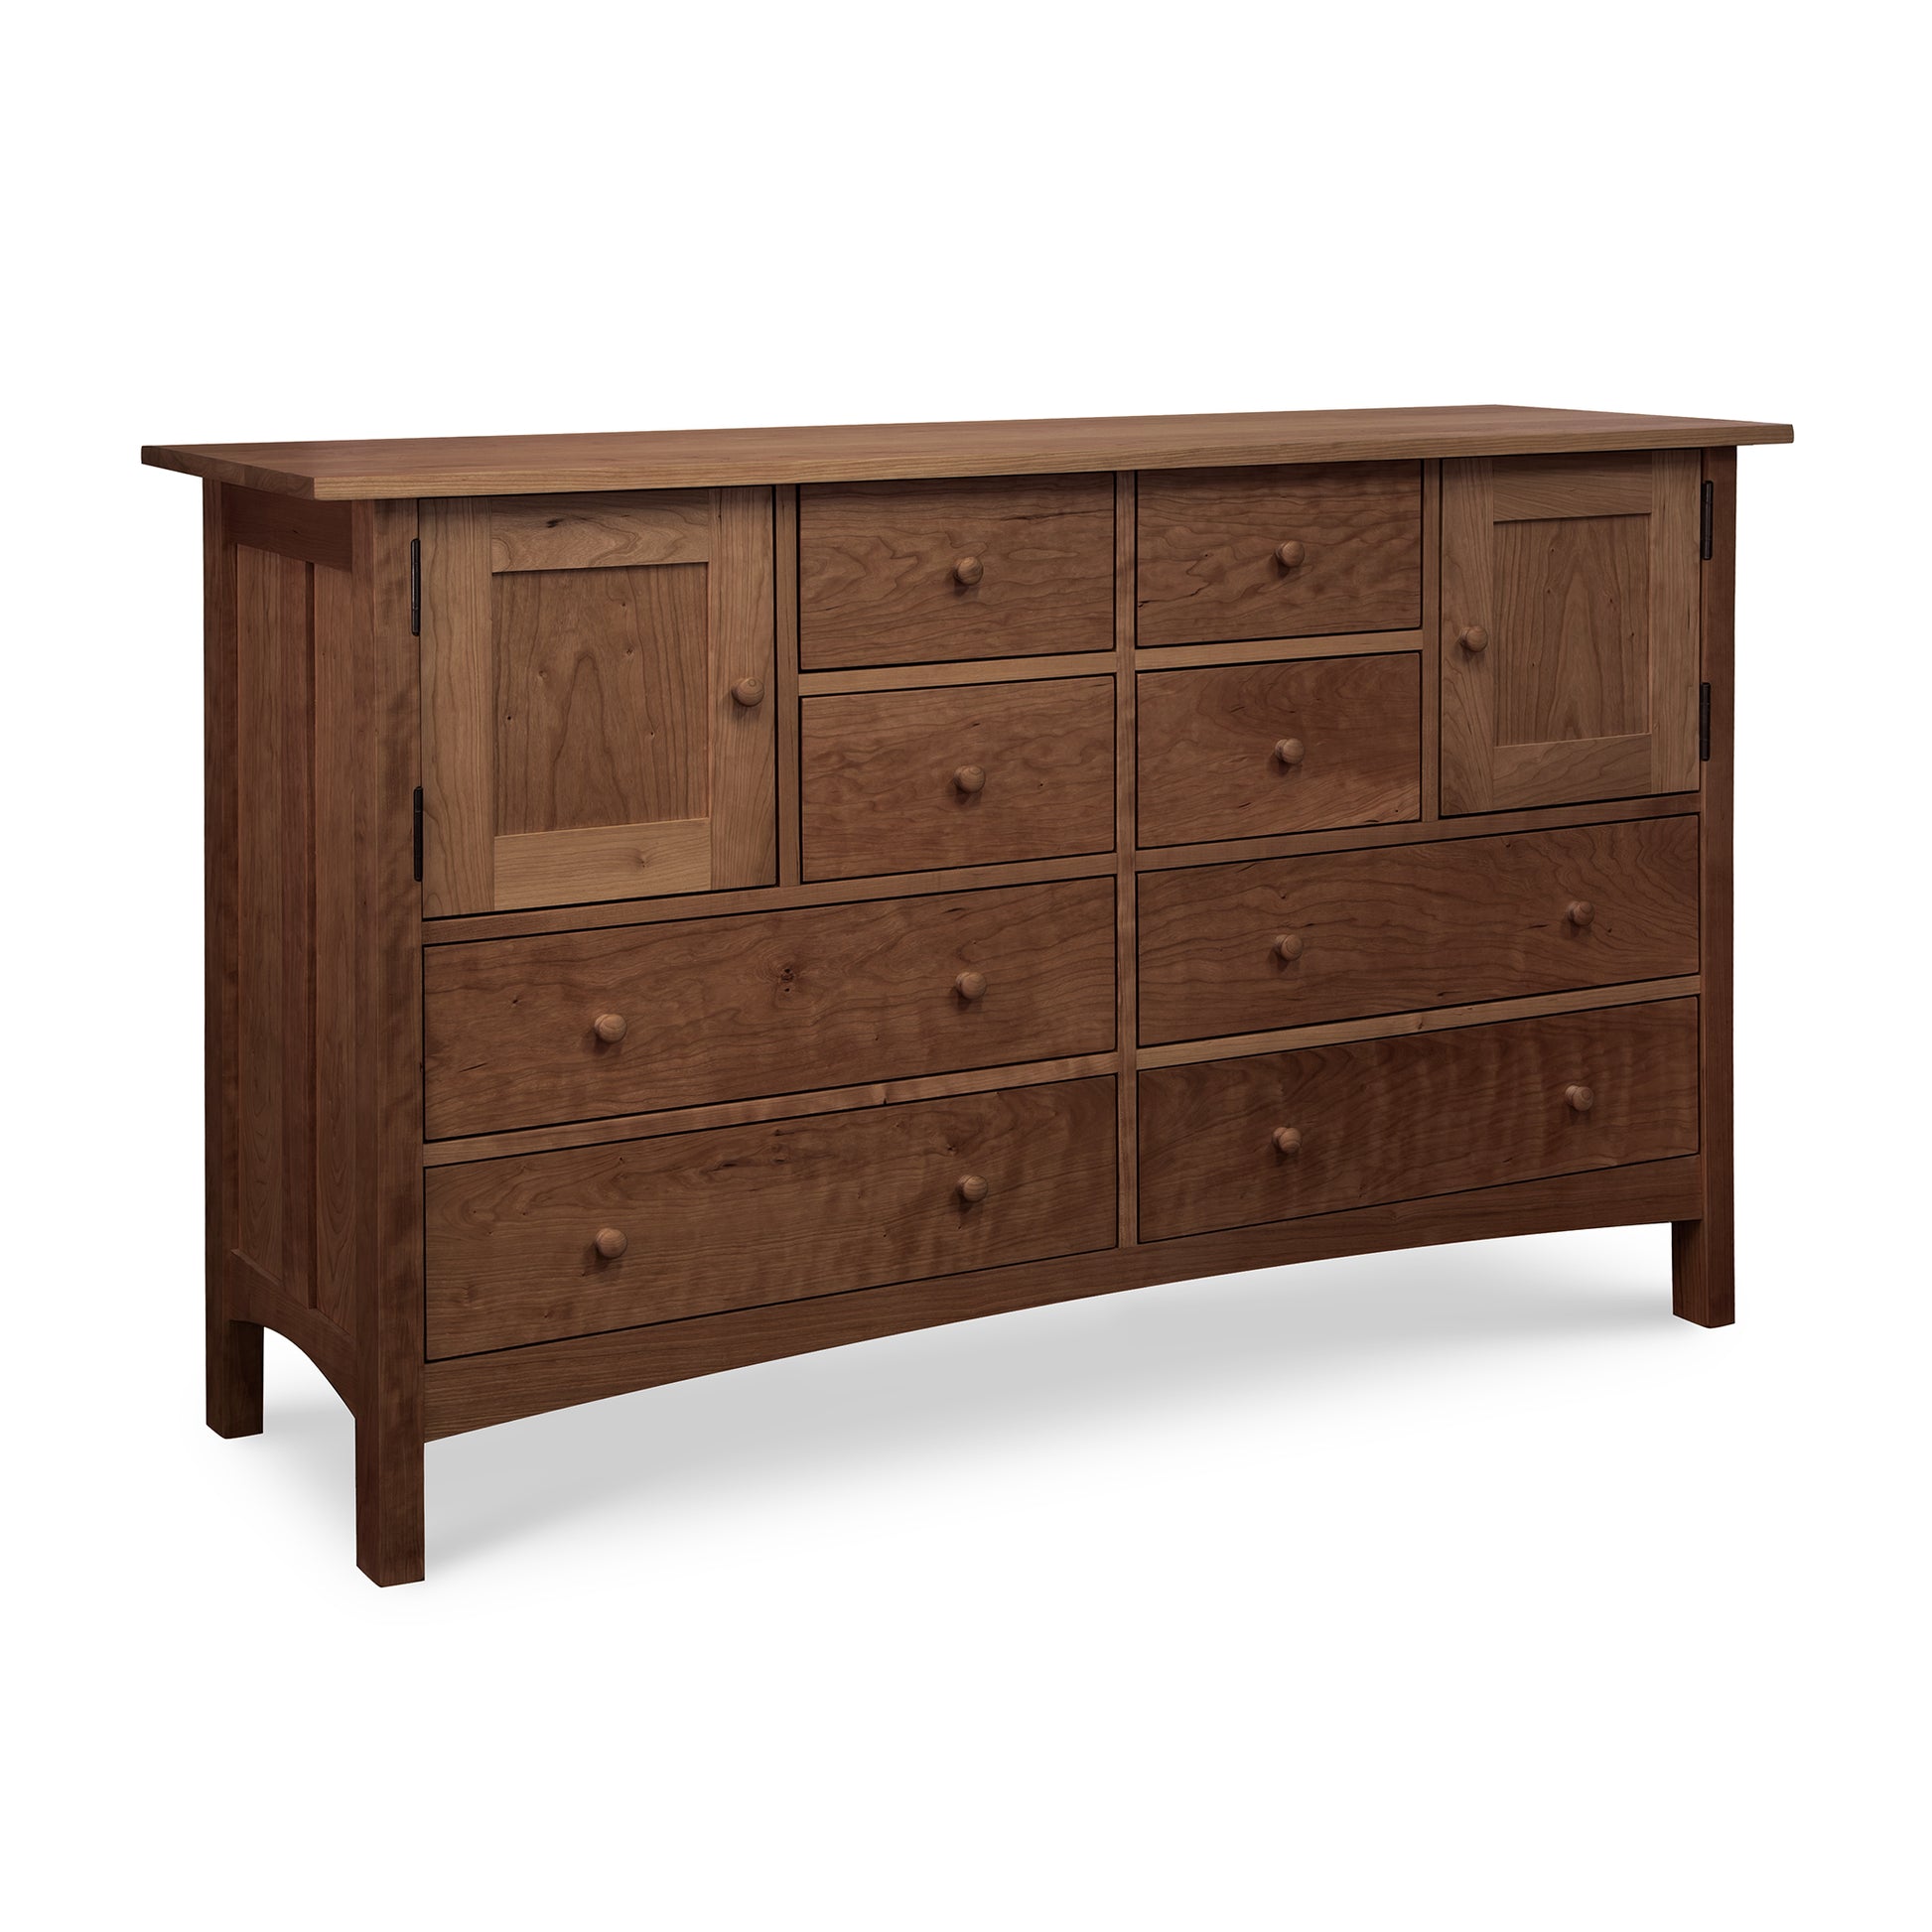 A luxury wooden dresser with drawers, known as the Vermont Furniture Designs Burlington Shaker 8-Drawer 2-Door Dresser.